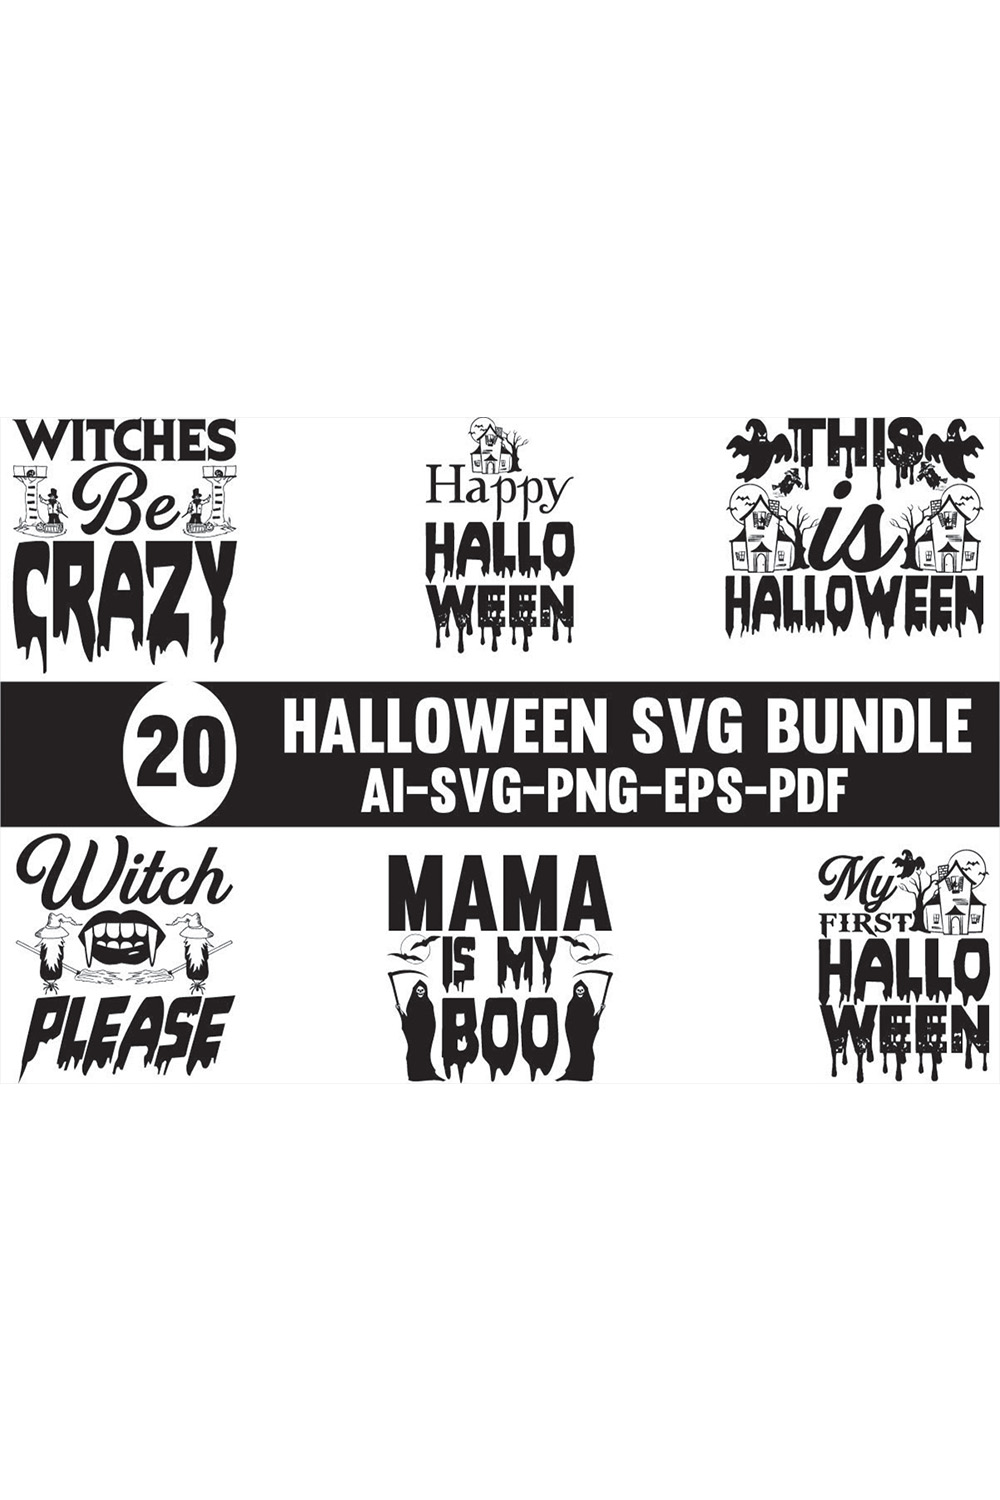 Halloween SVG Design Bundle - Pinterest.